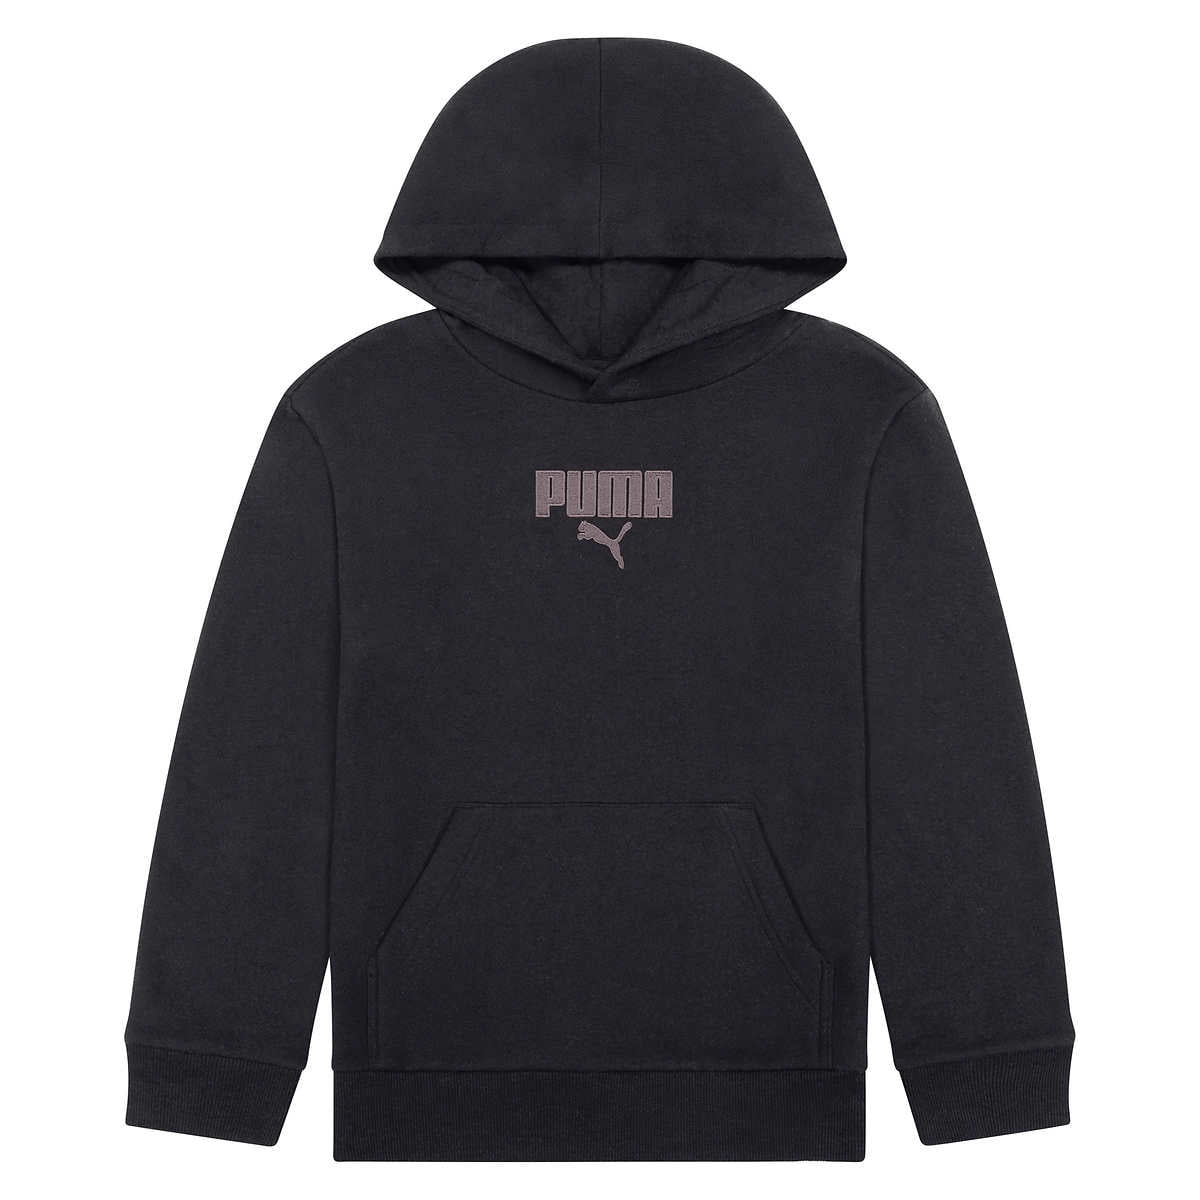 Puma Youth Boys' Fleece Hoodie (Black, Small 7-8)